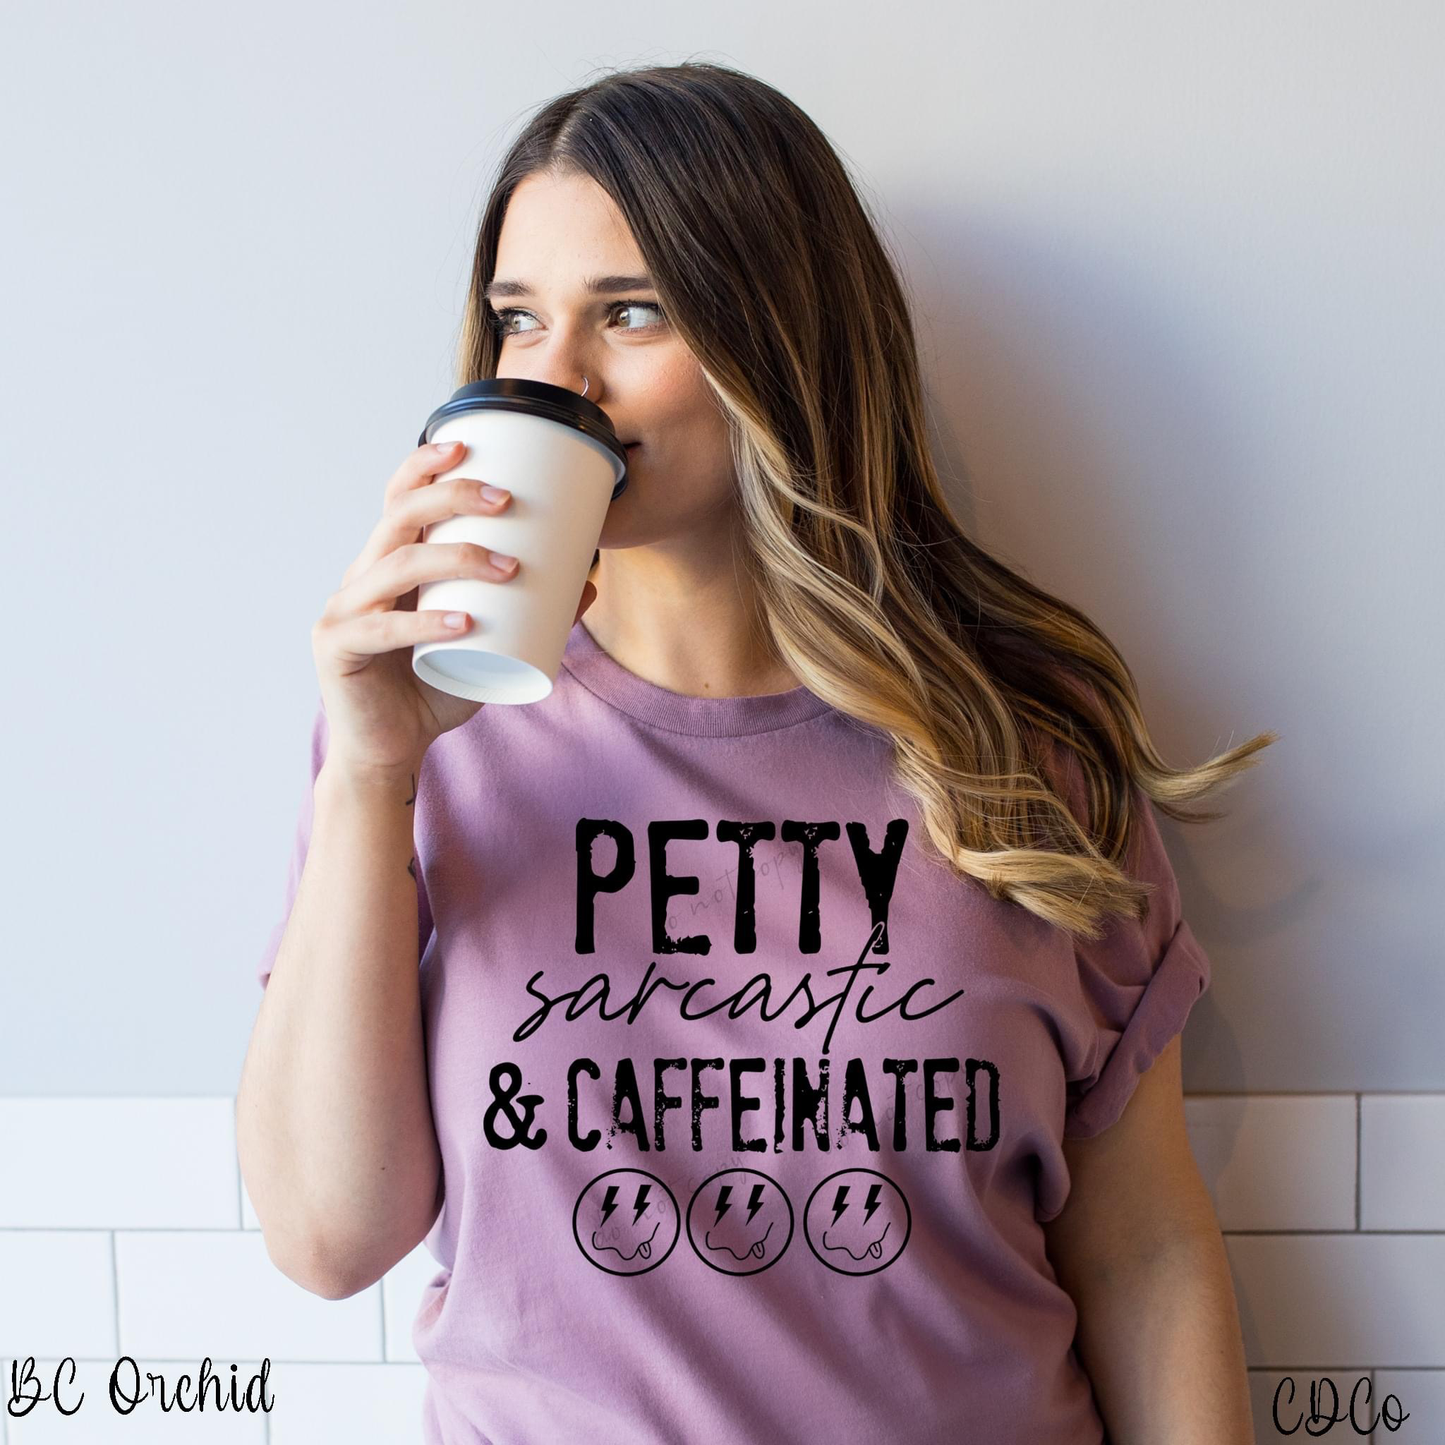 Petty Sarcastic & Caffeinated (325°)